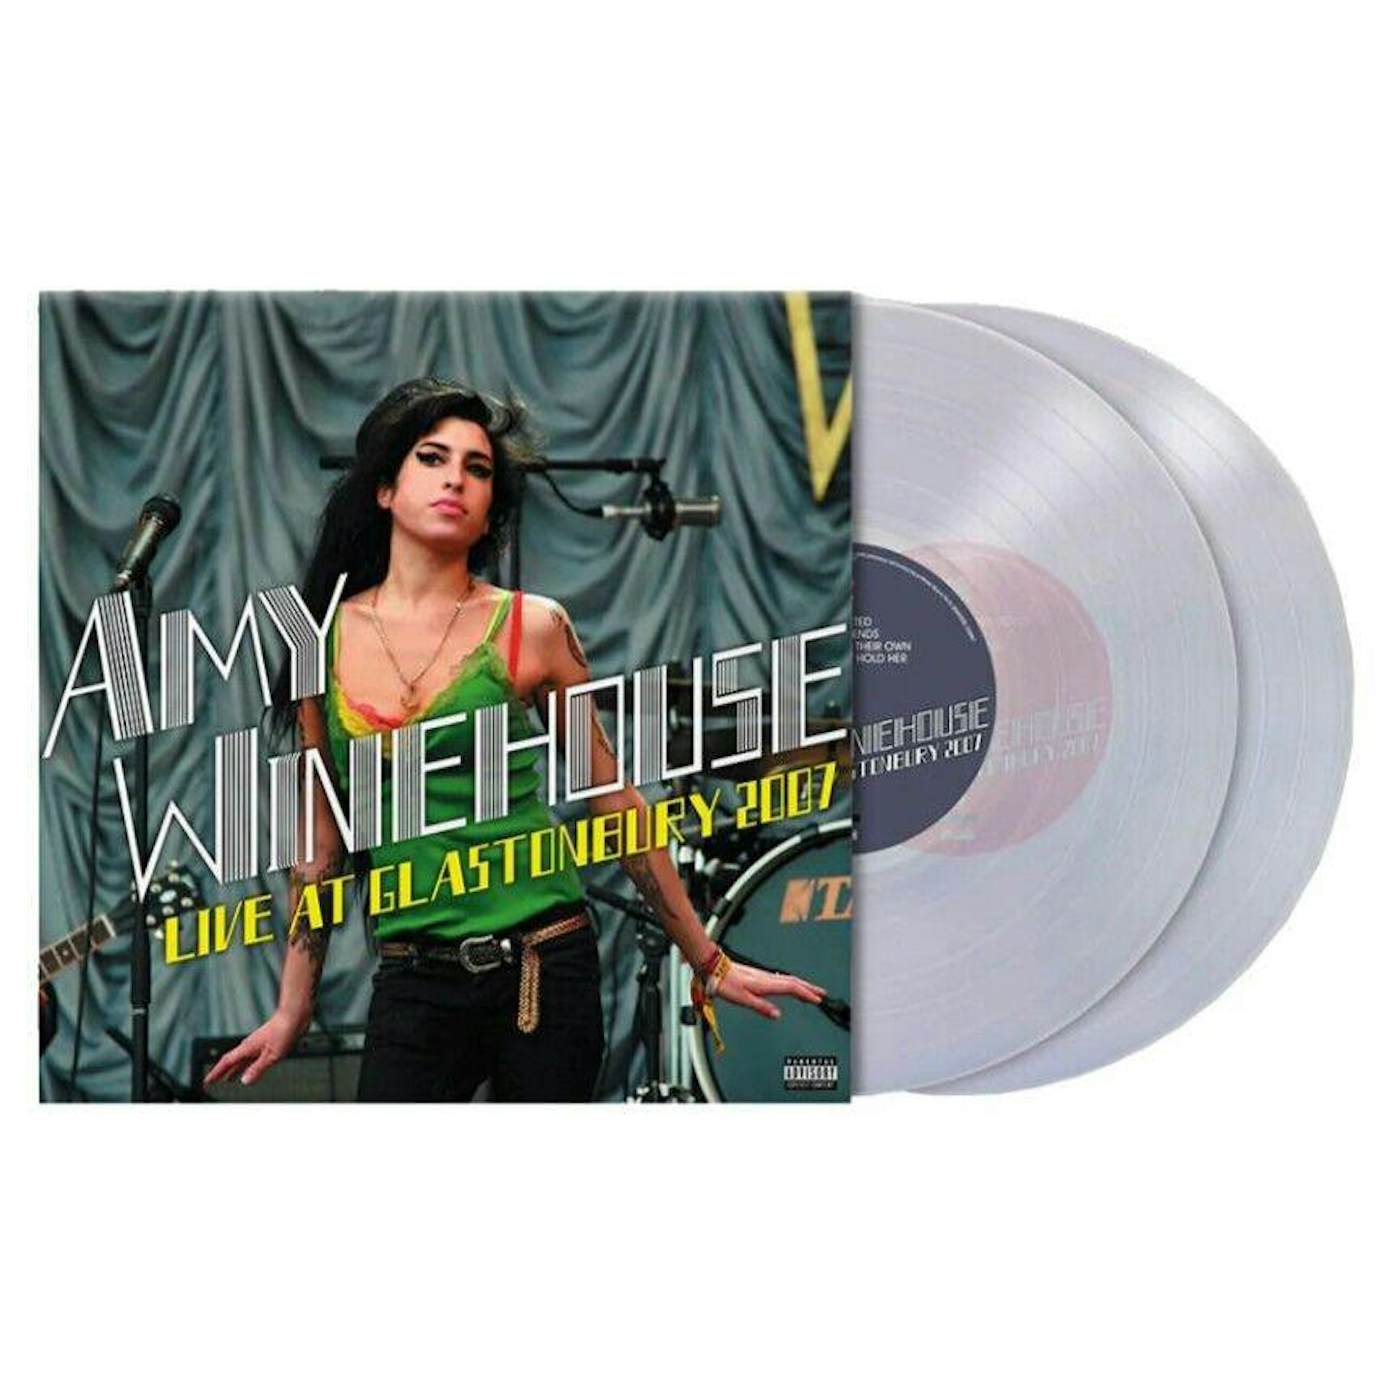 Amy Winehouse Live At Glastonbury 2007 (Clear/2LP) Vinyl Record